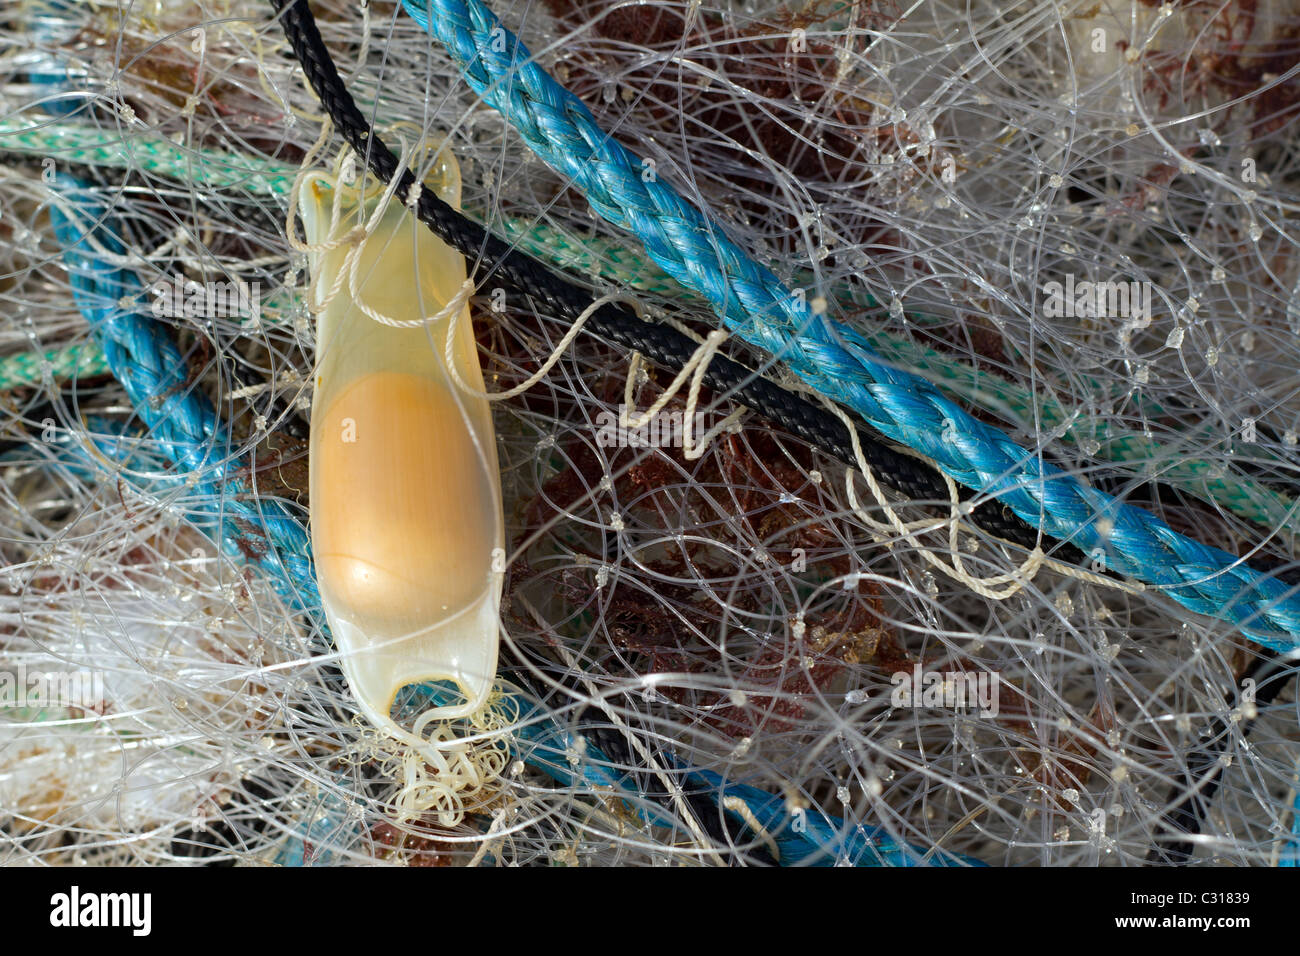 Lesser Spotted Dogfish, Scyliorhinus Canicula egg sack or a Mermaids Purse, entangled amongst fishing nets. Stock Photo